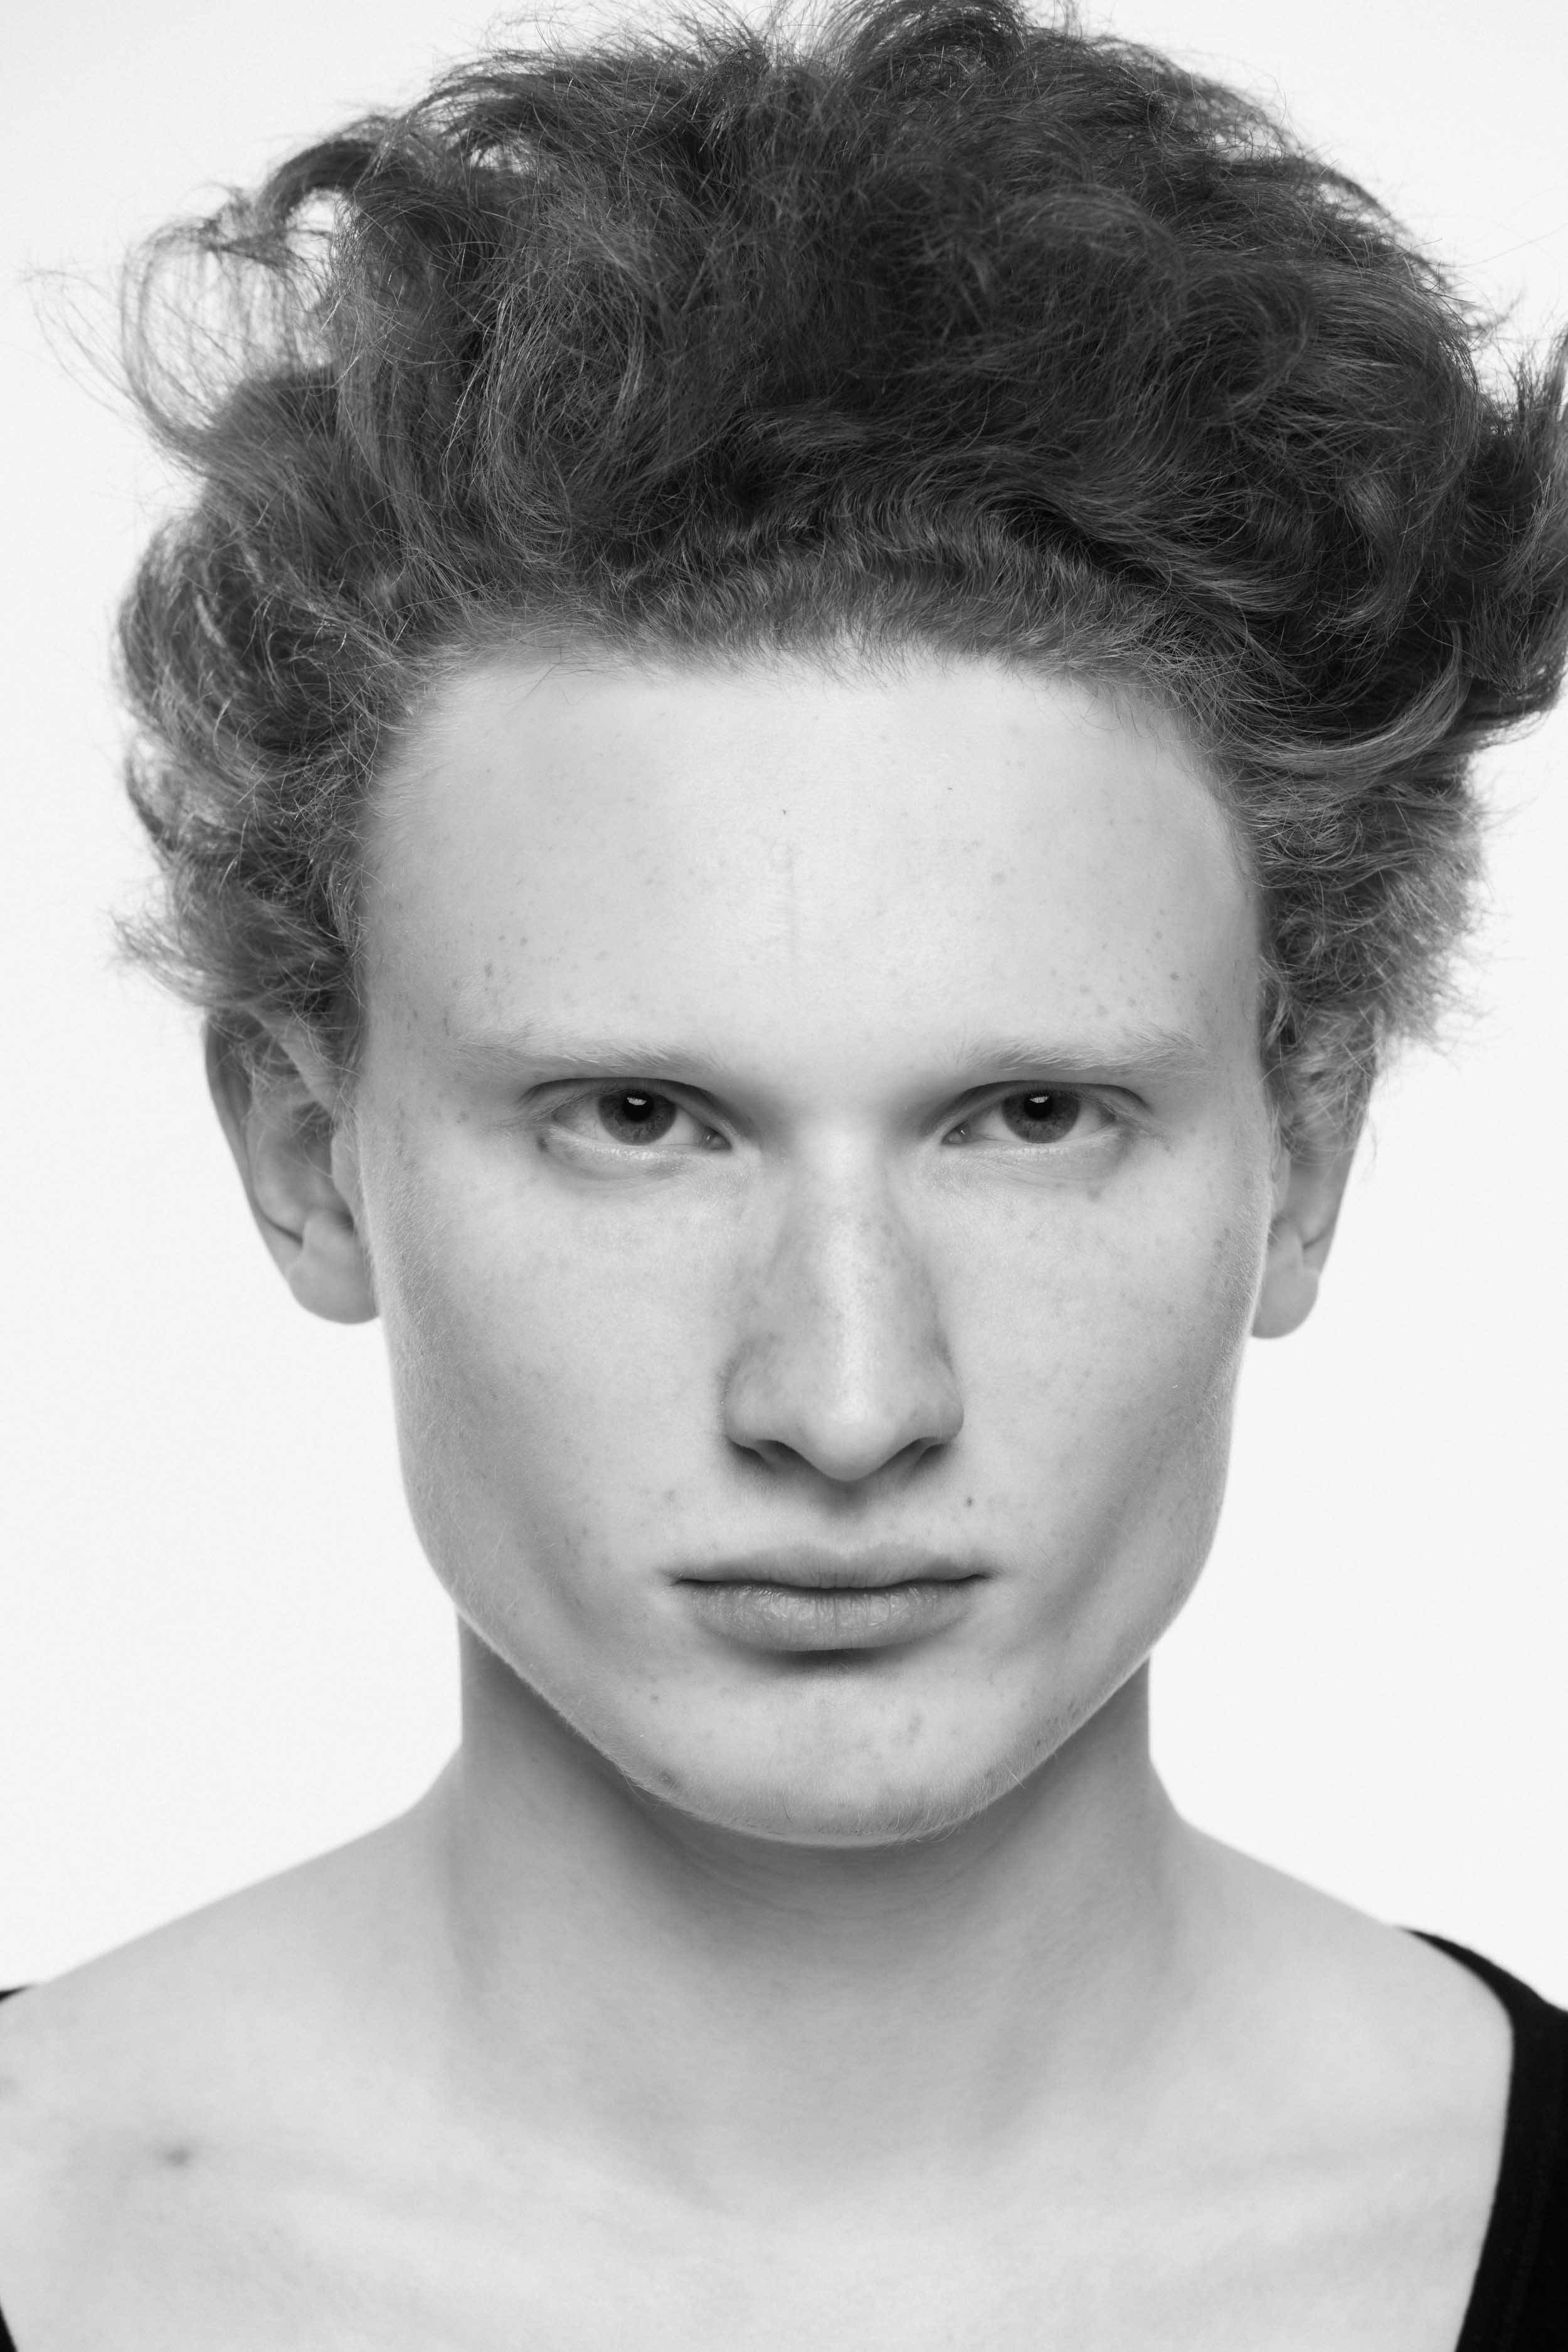 Cody-Rasmussen-Russian-Portraits-15